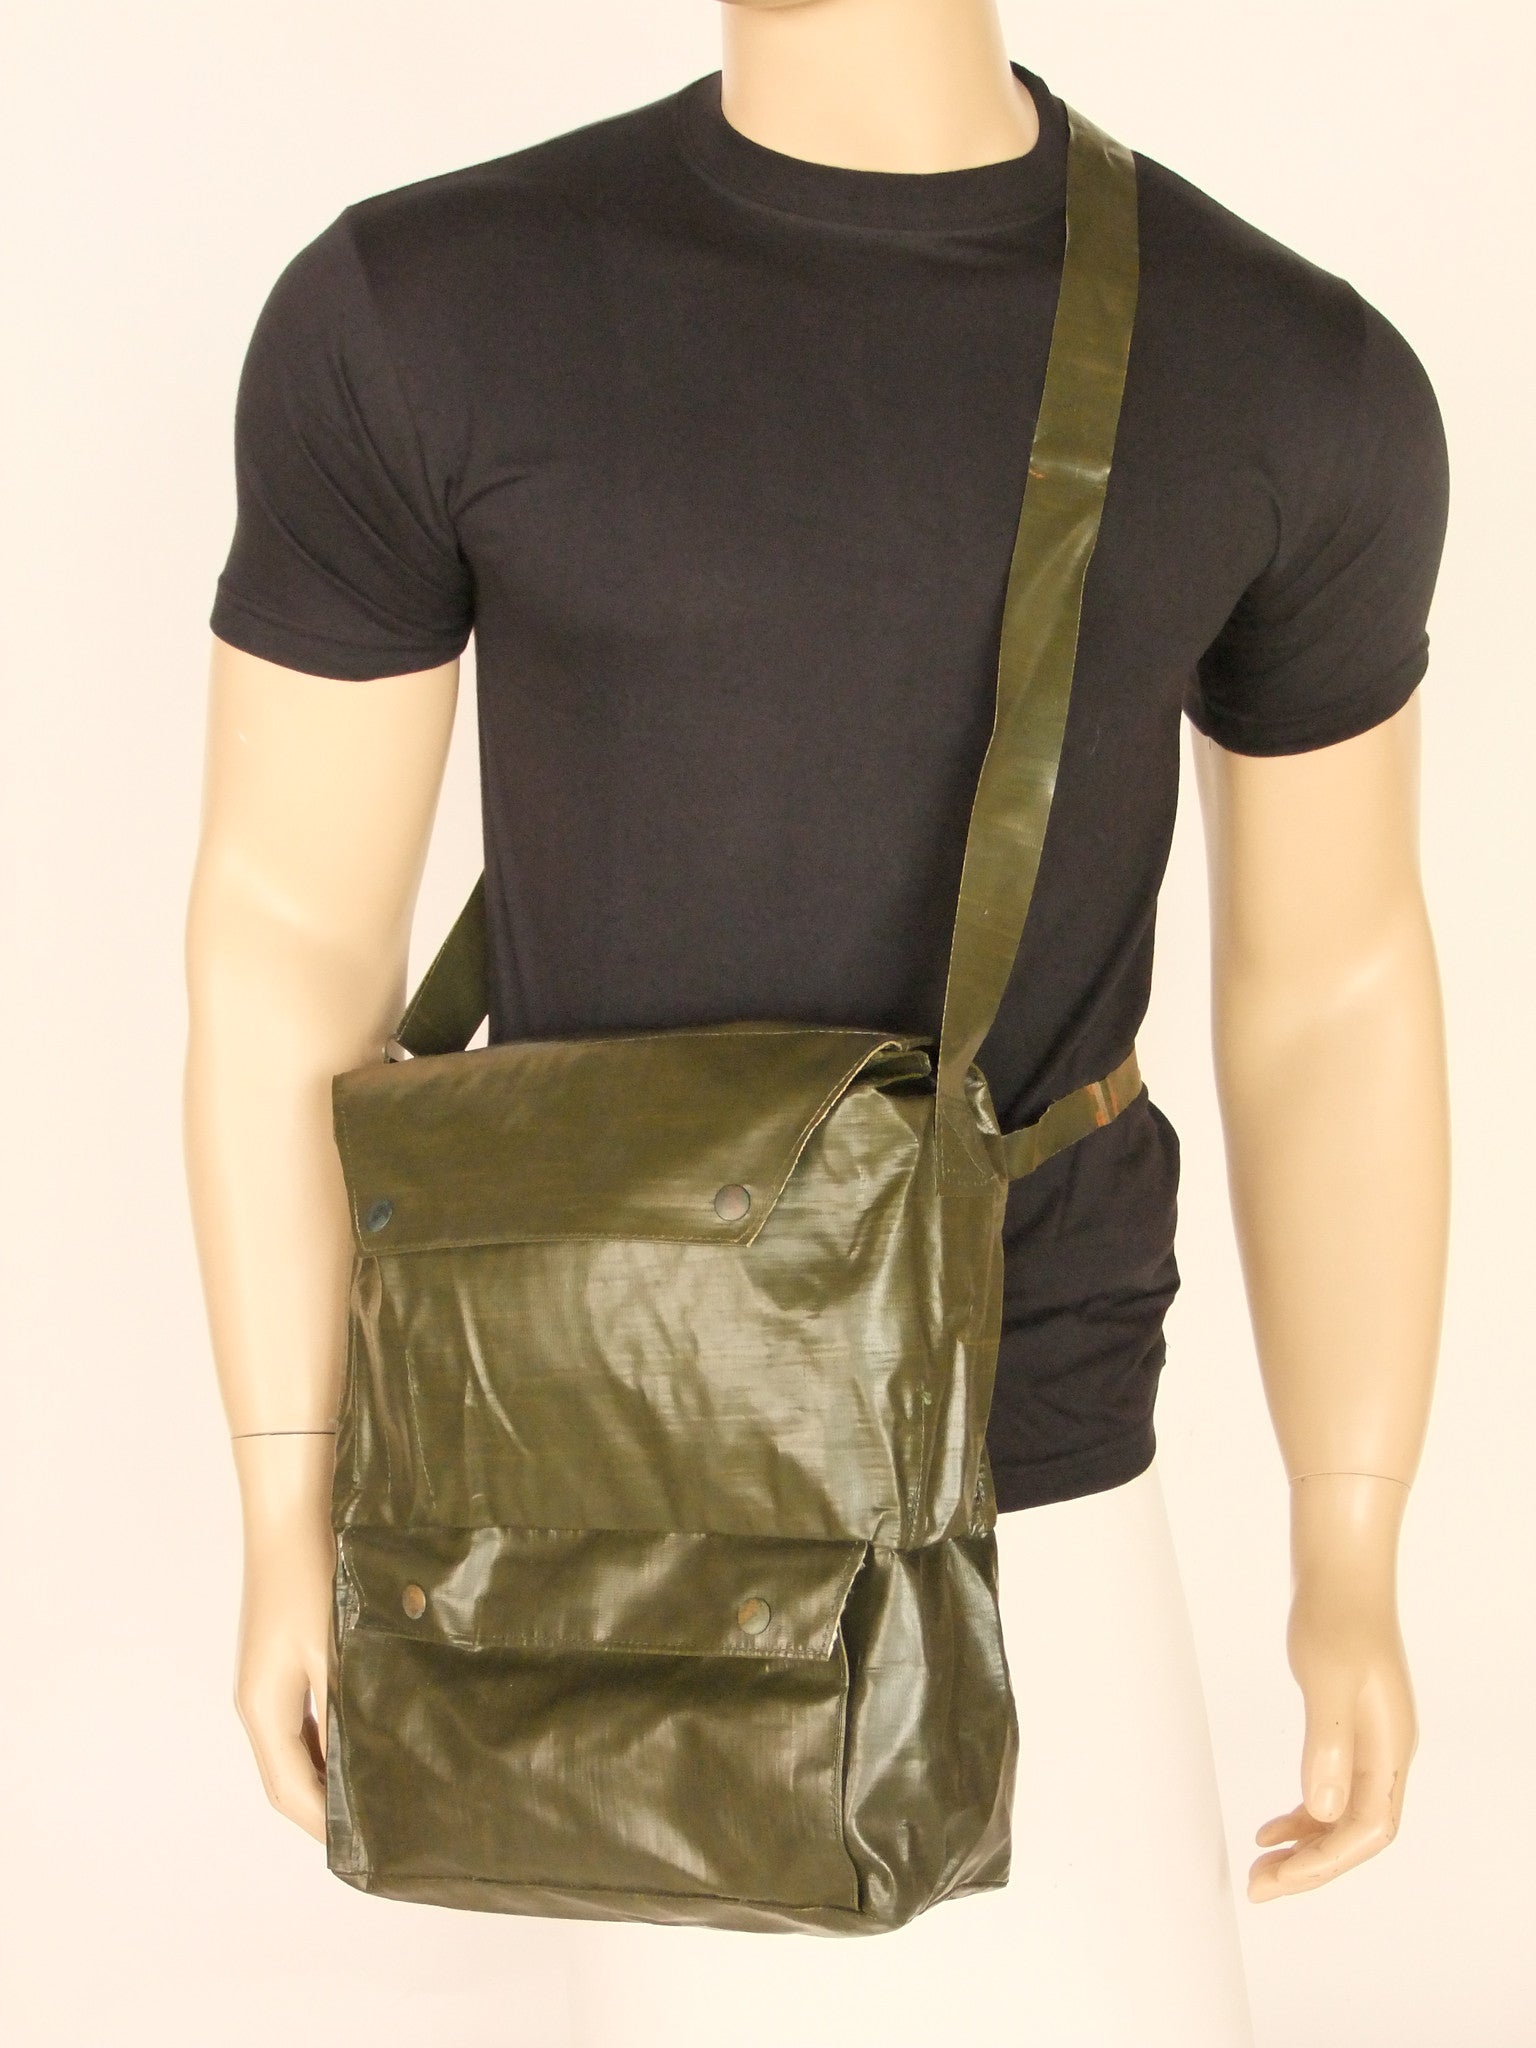 Army surplus water resistant gas mask  bag.